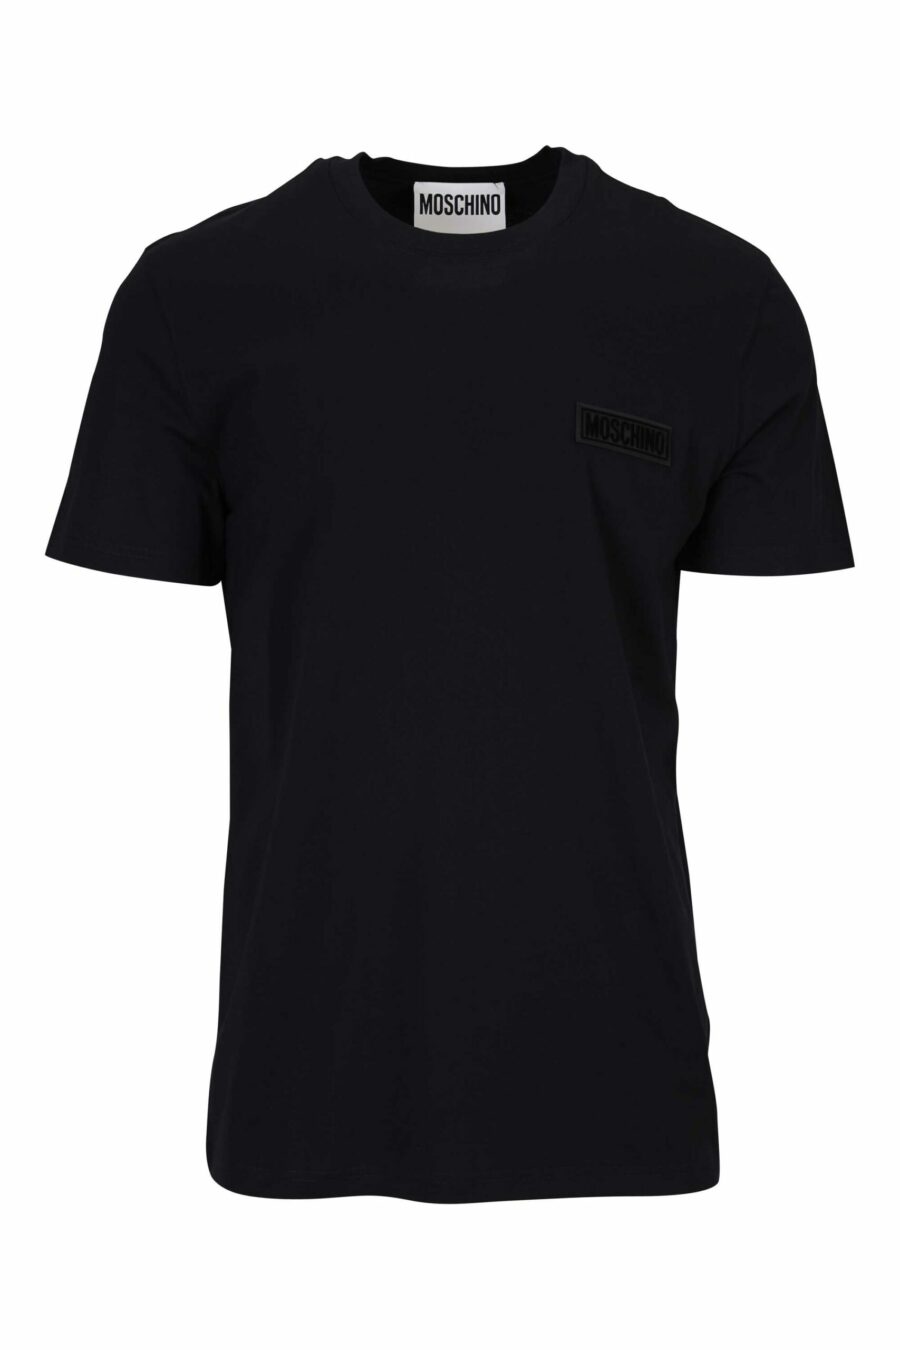 T-shirt preta com mini-logotipo branco - 667113394862